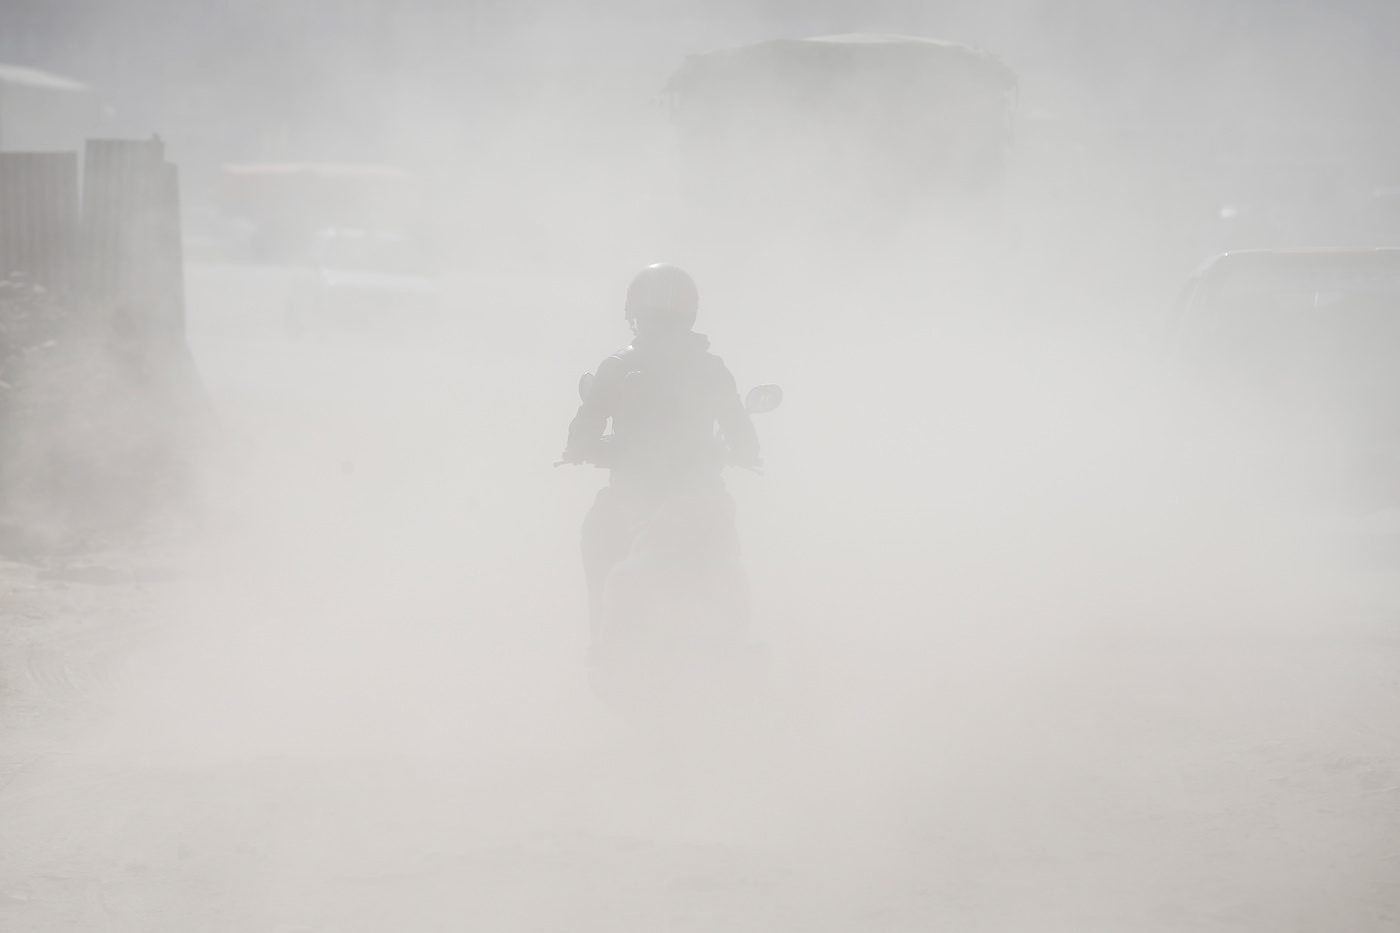 nepal kathmandu asia photojournalism  news dailylife air pollution Health polluted